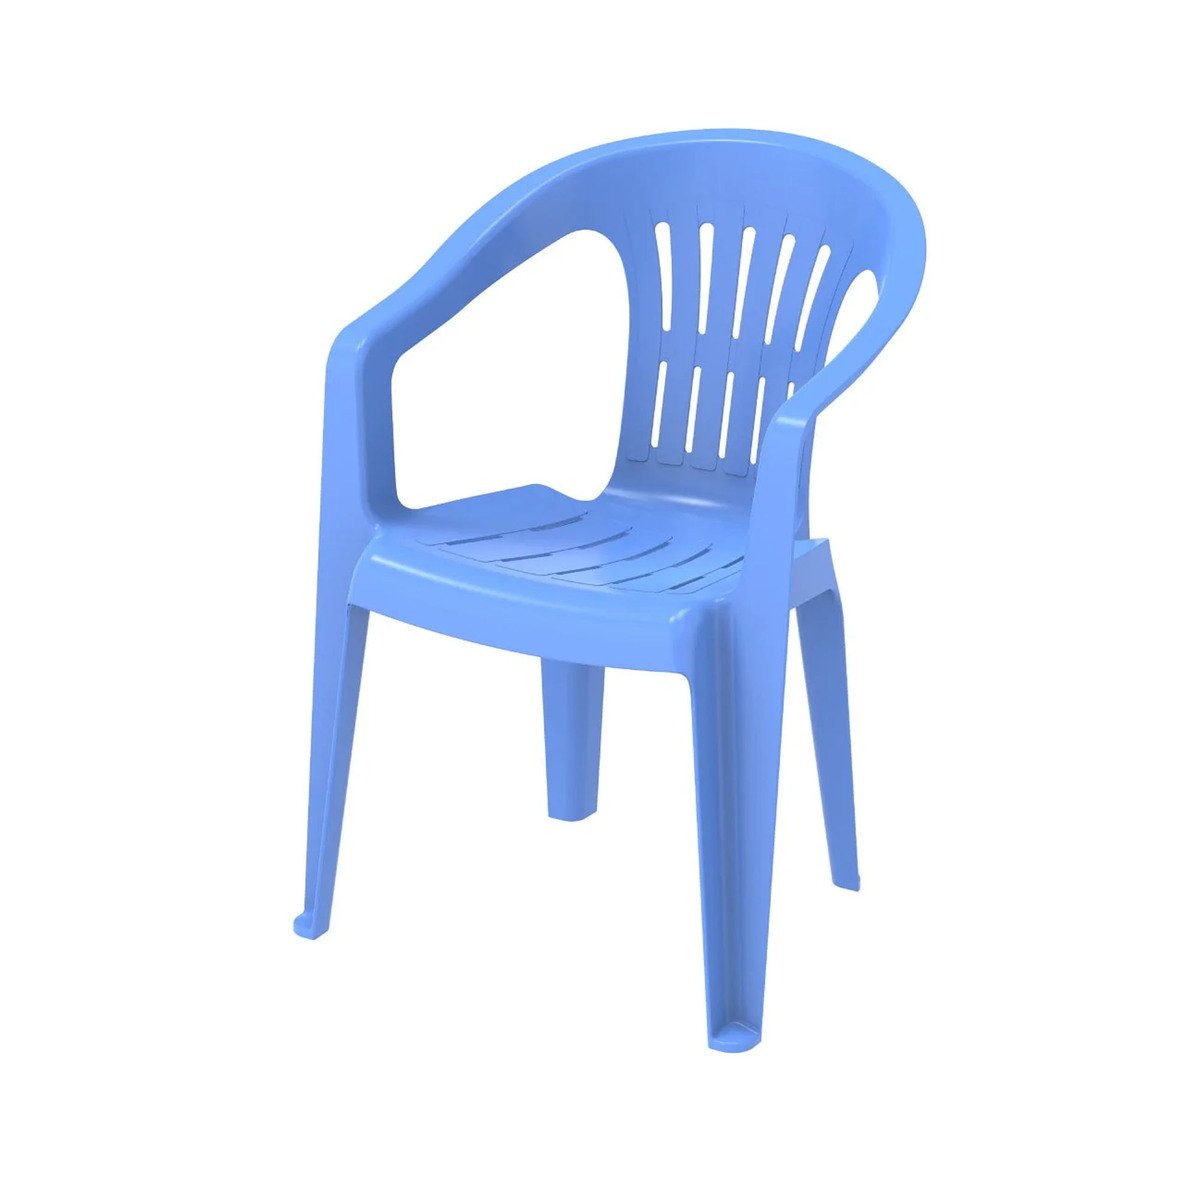 Cosmoplast Princess Outdoor Garden Chair IFOFGD002 Assorted Color